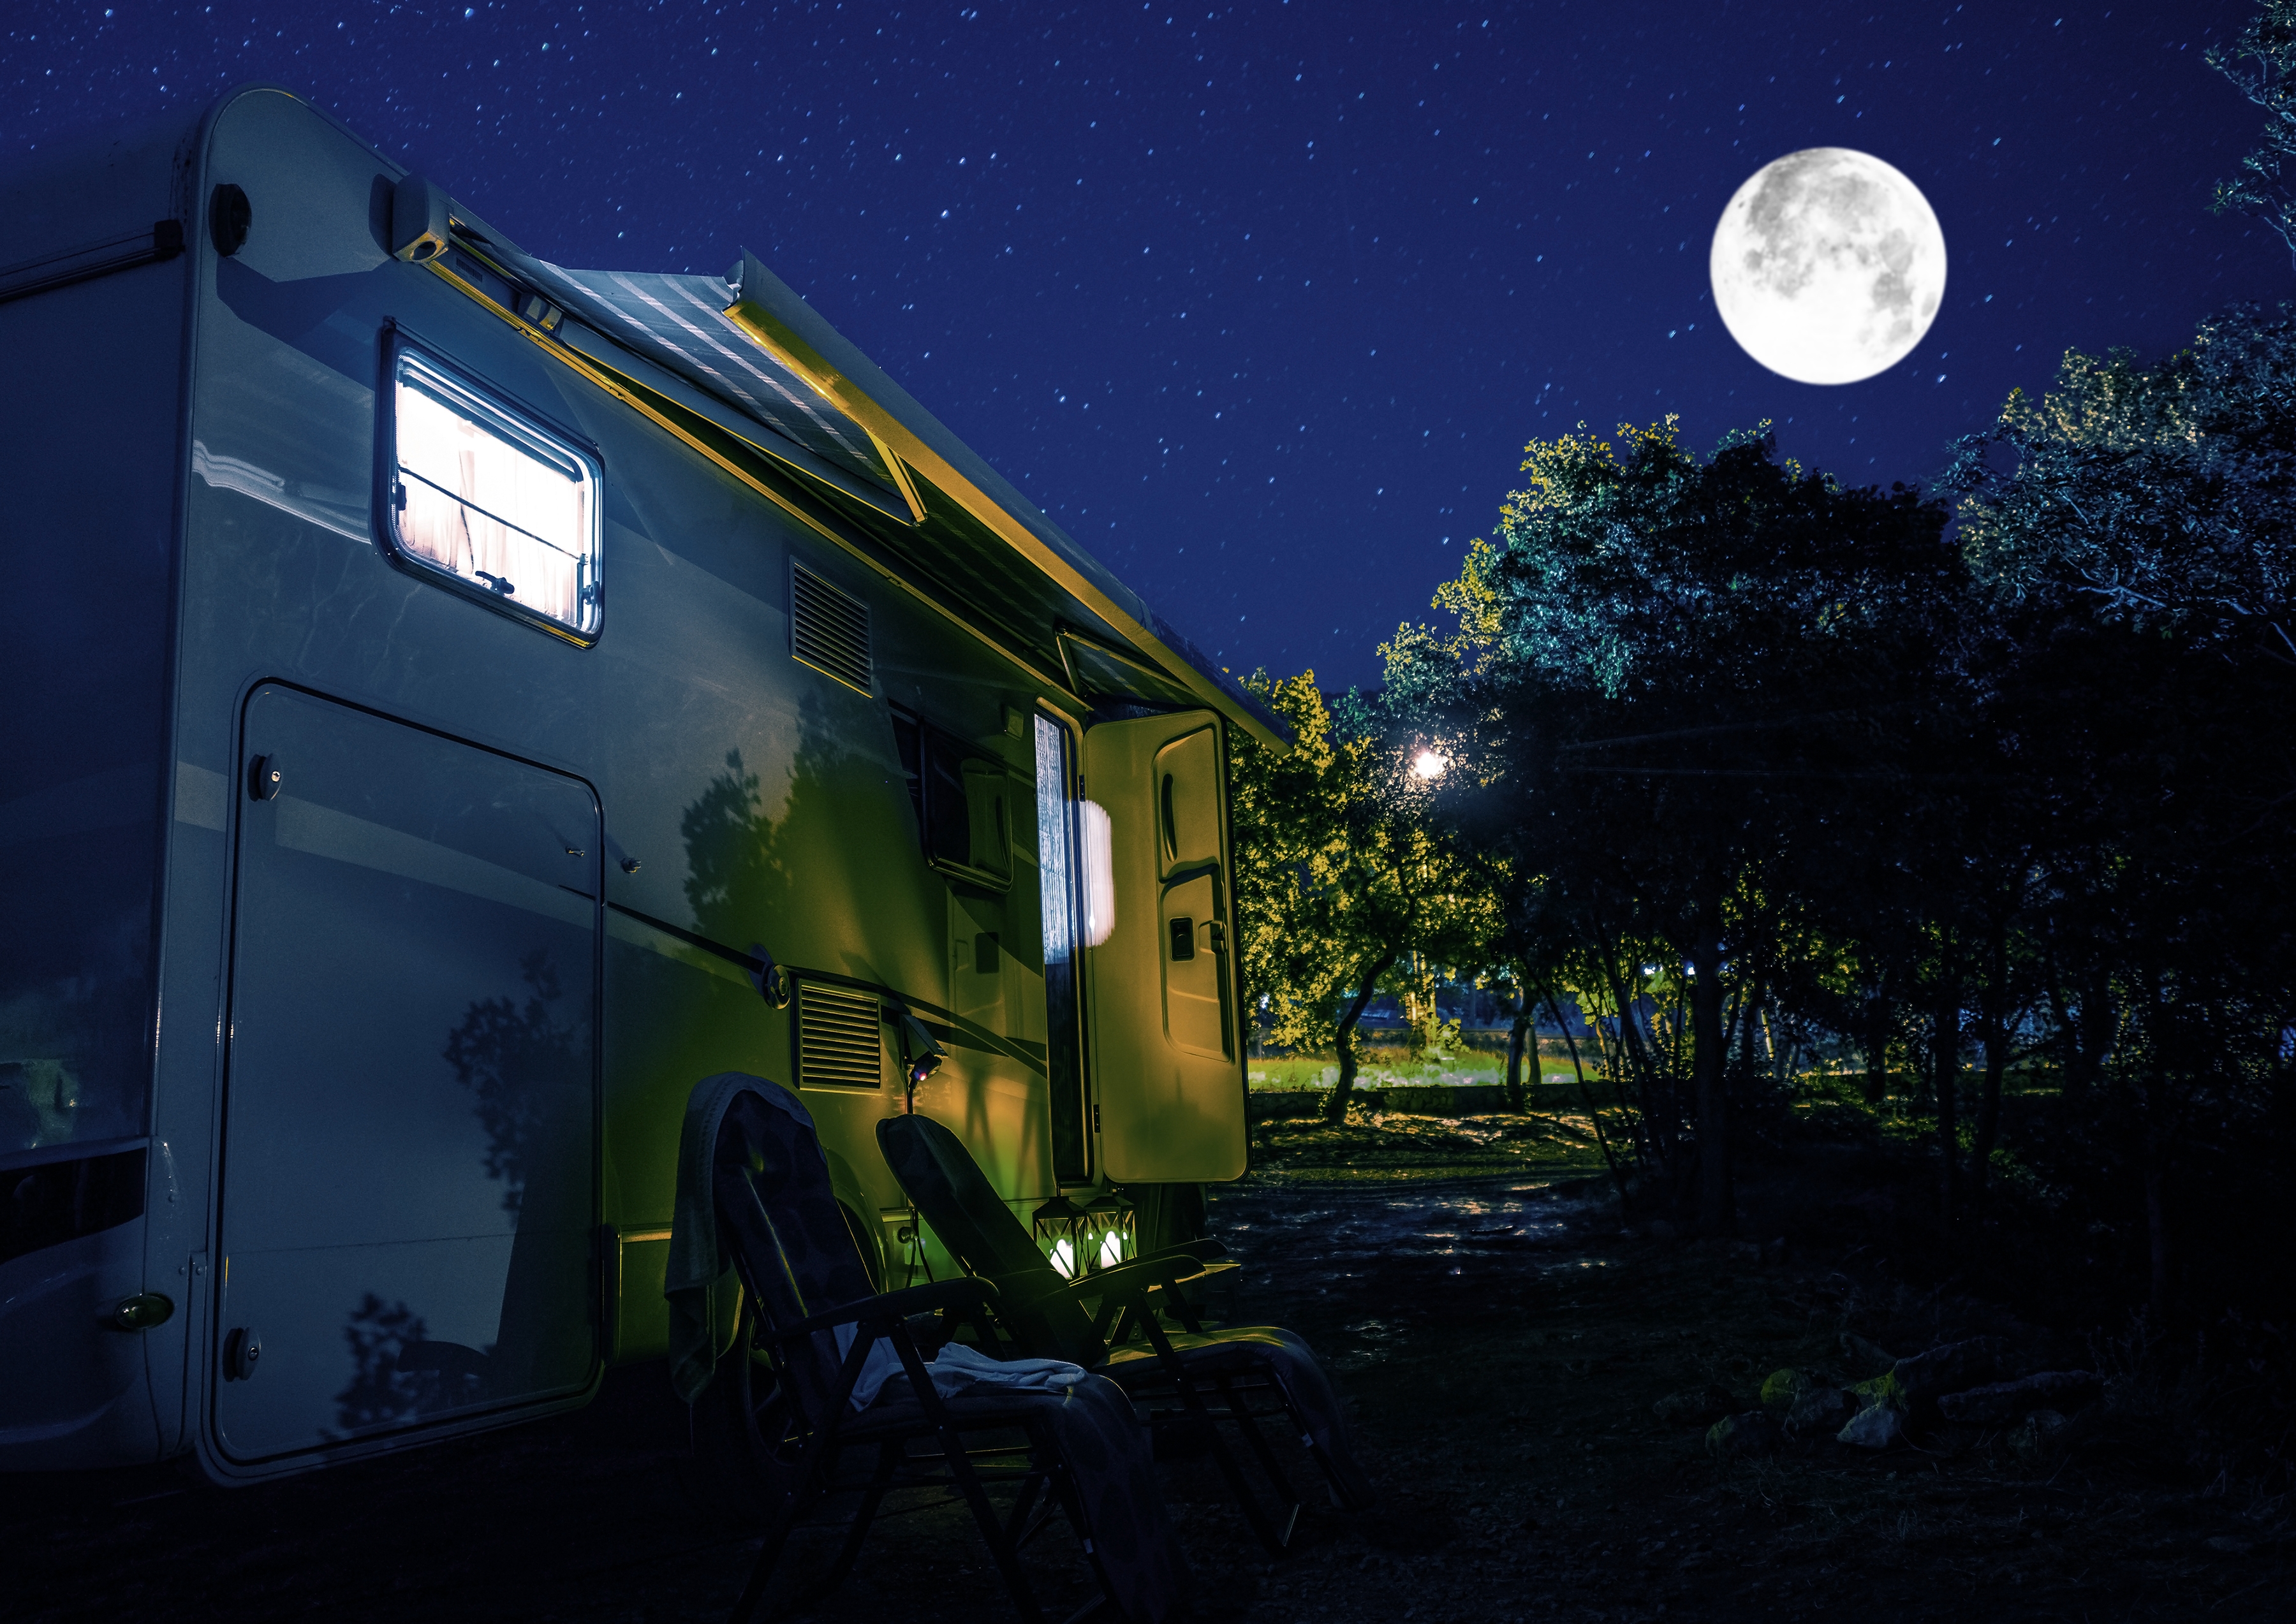 Summer Night RV Camping. Recreational Vehicle Class C Motorhome Under Starry Sky. Campground RV Park Pitch. Modern Camper Van.